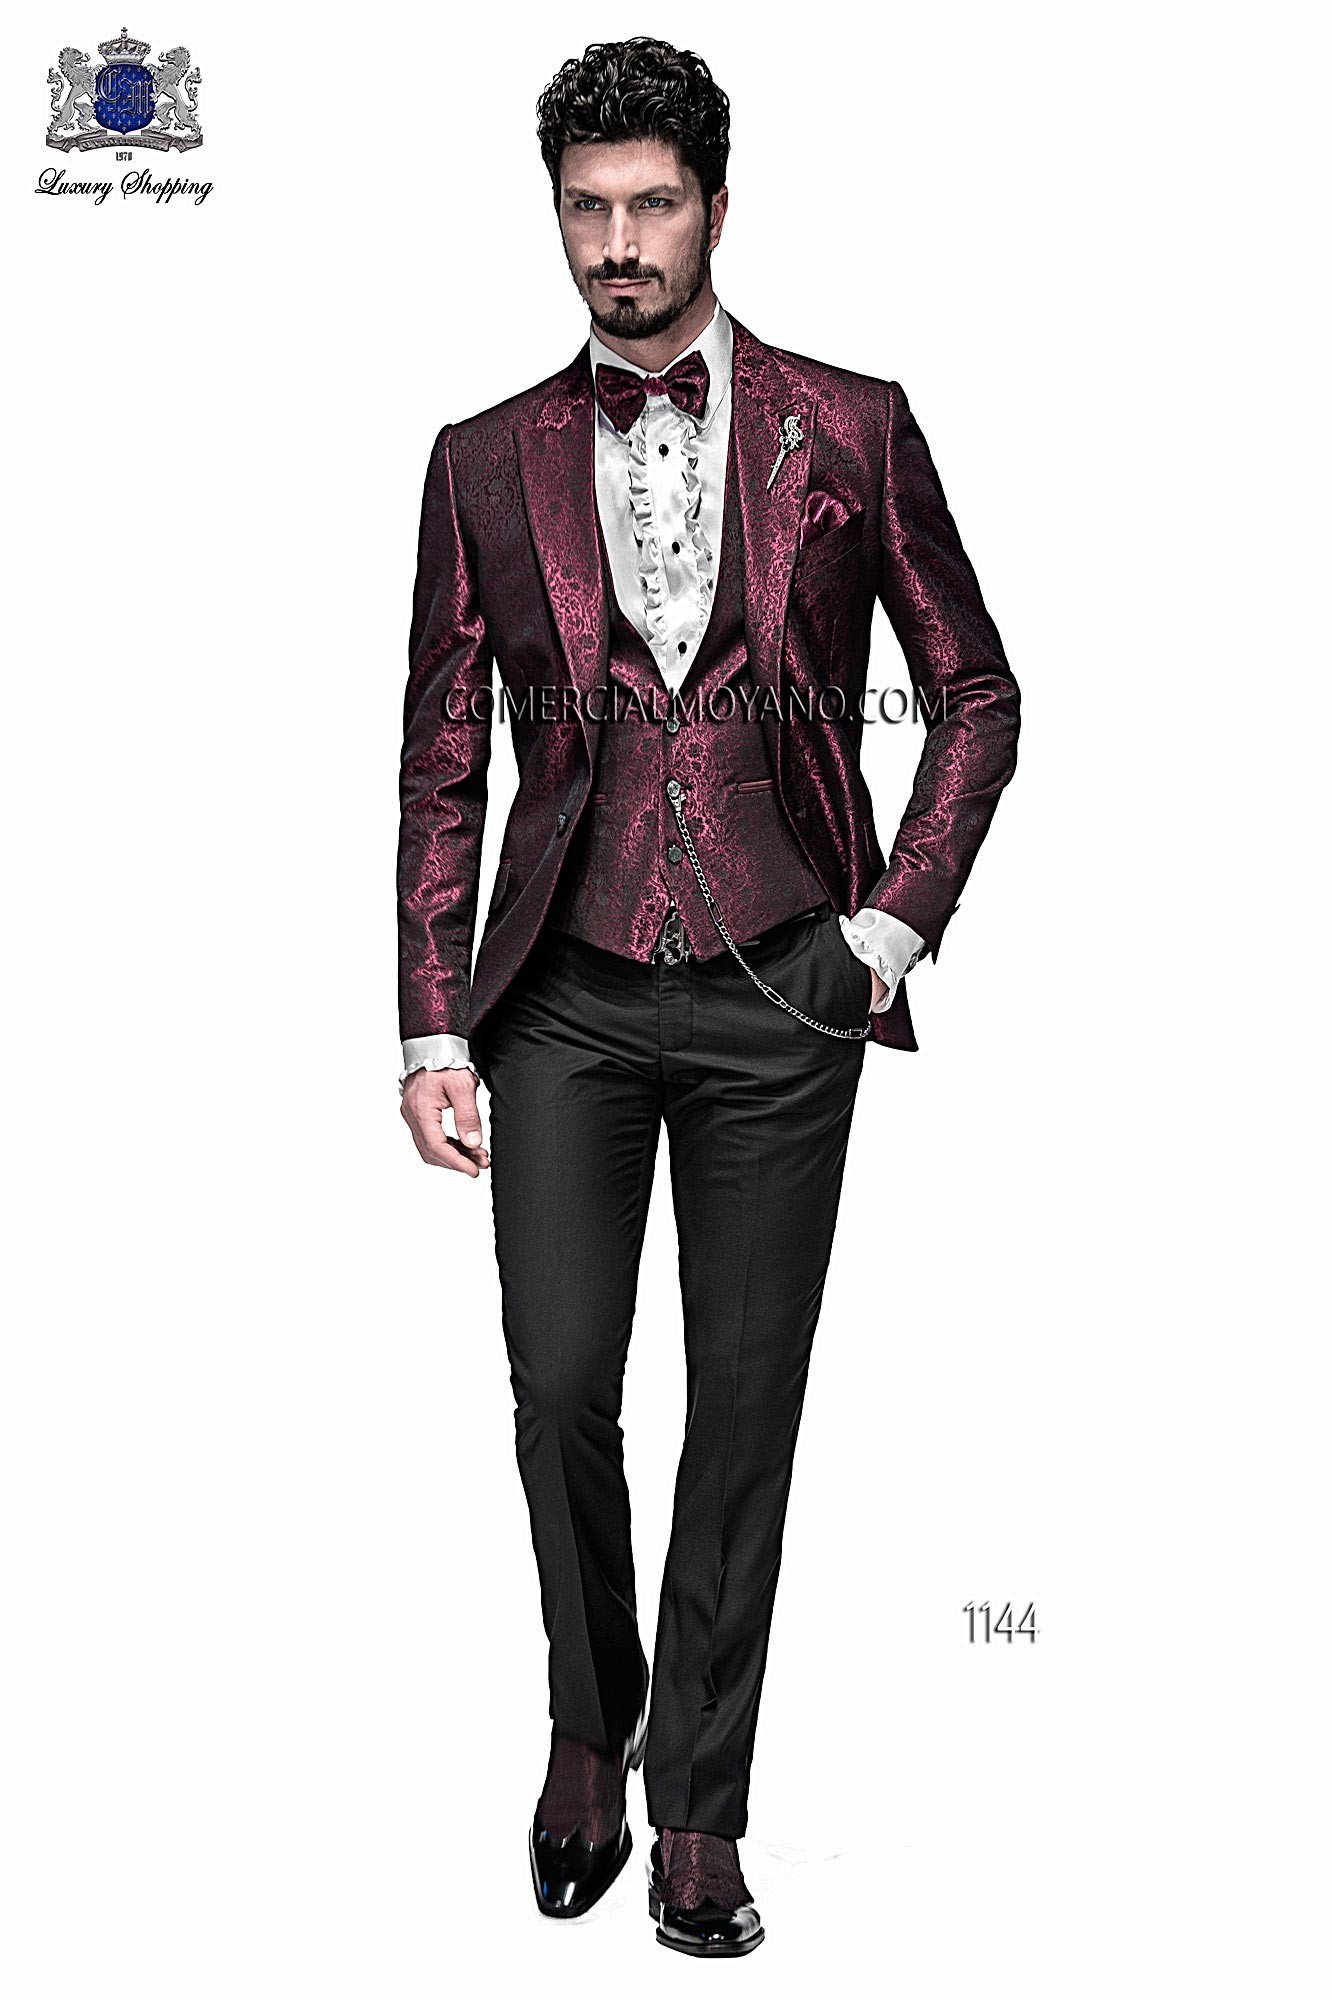 Emotion black and bordeaux men wedding suit model 1144 Mario Moyano